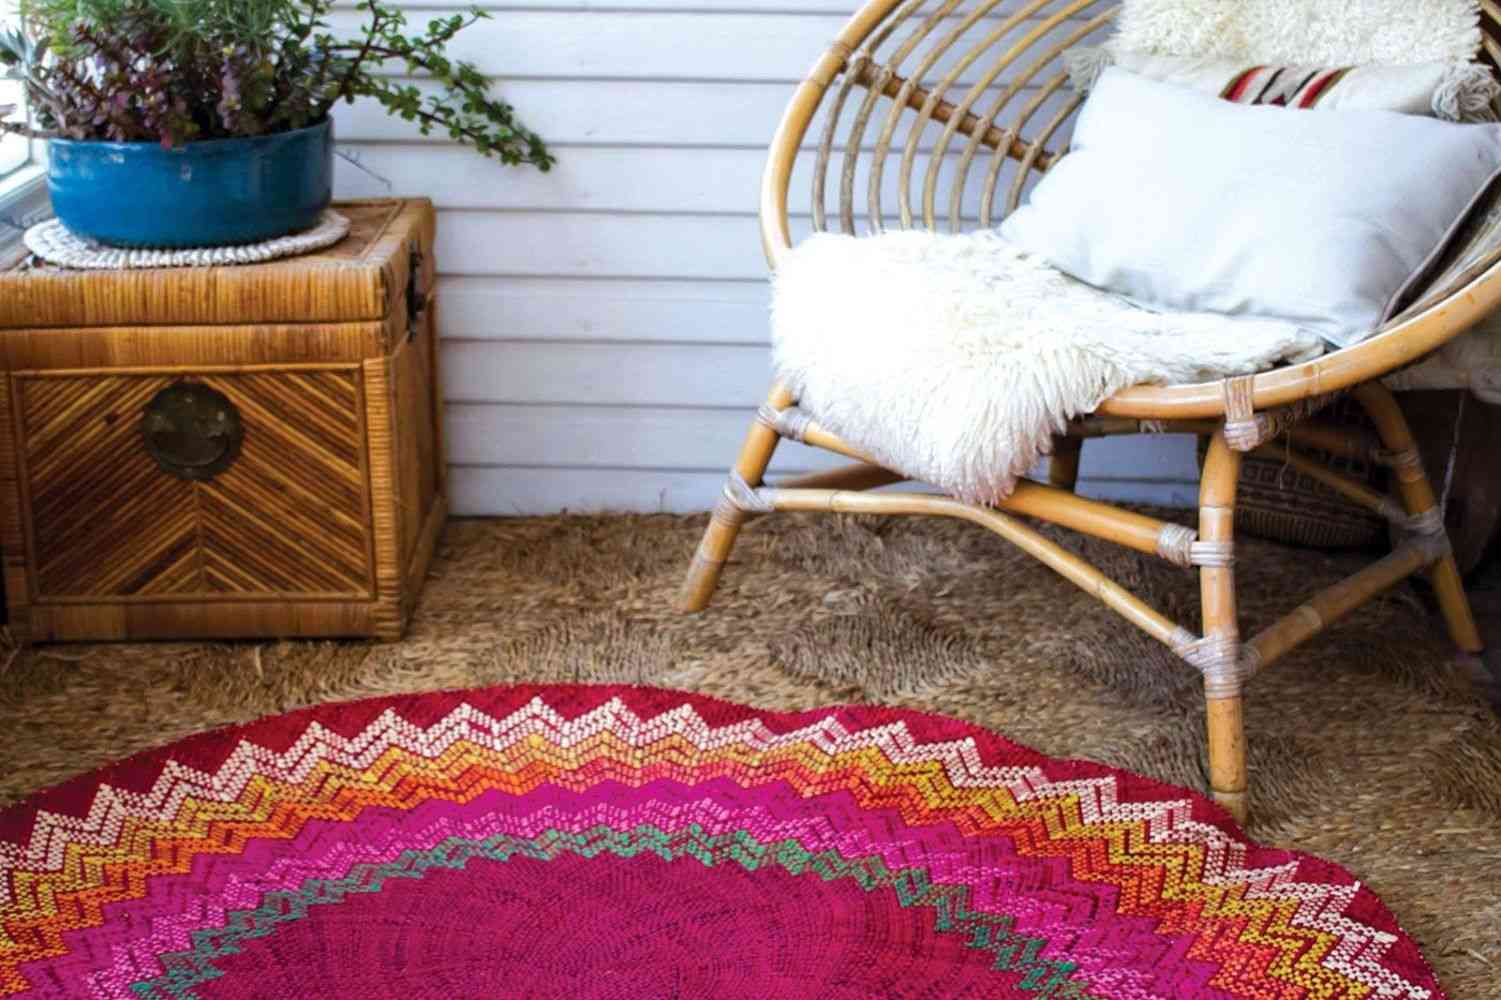 Sunburst Round Mat, Seagrass Woven Rug - Home Accent Decorative